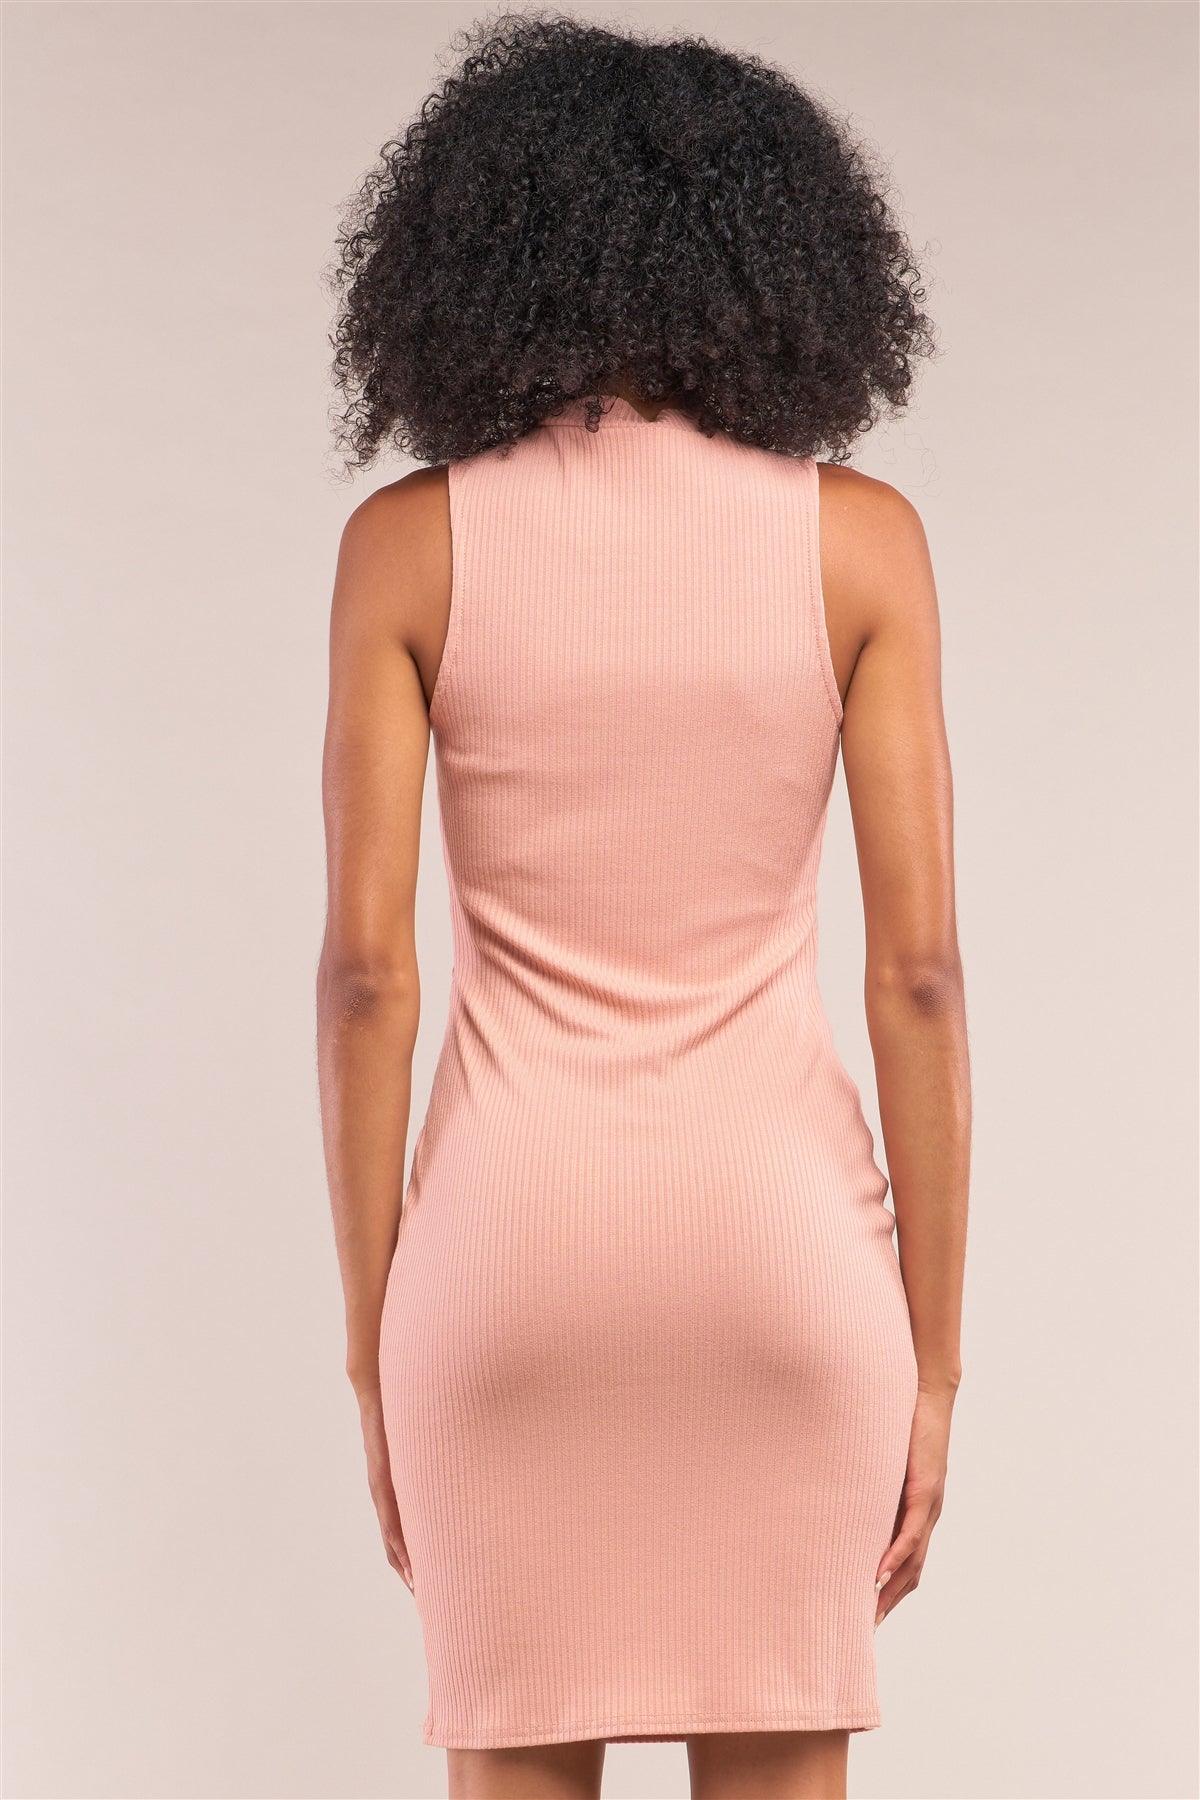 Salmon Pink Ribbed Sleeveless Turtleneck Criss-Cross Front Detail Bodycon Mini Dress /1-1-2